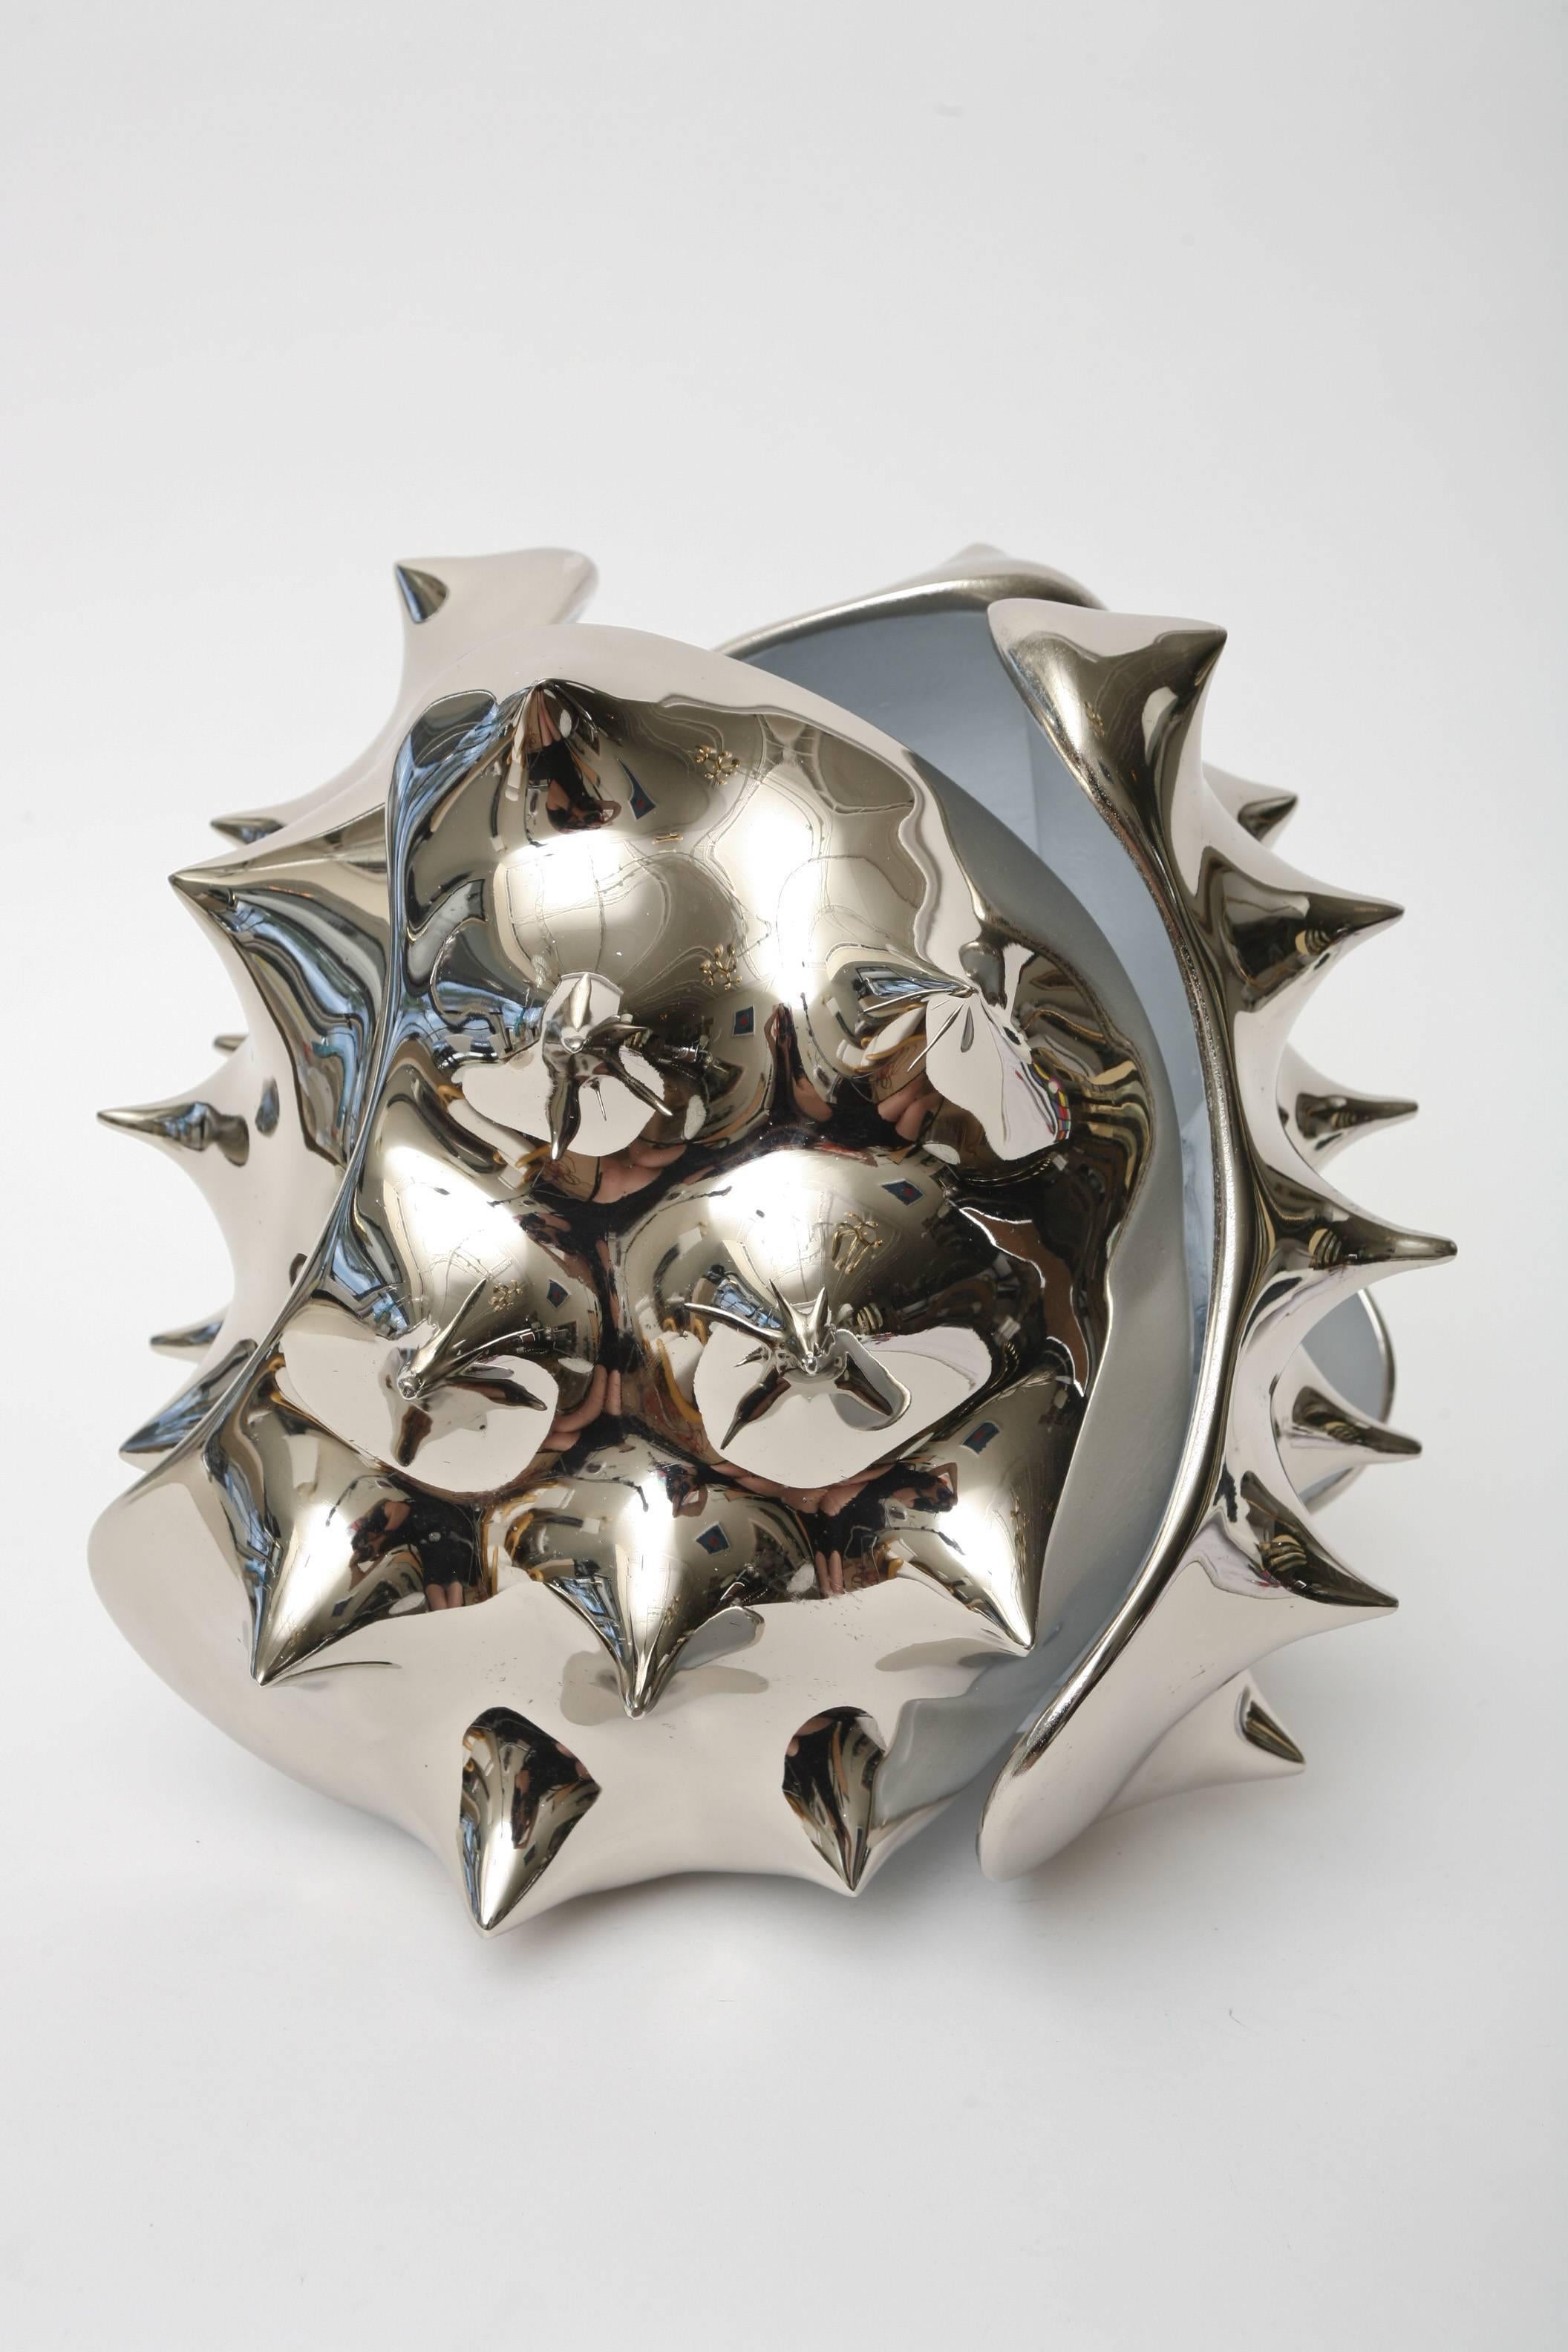 American Sculptural Nickel Silver Table Lamp